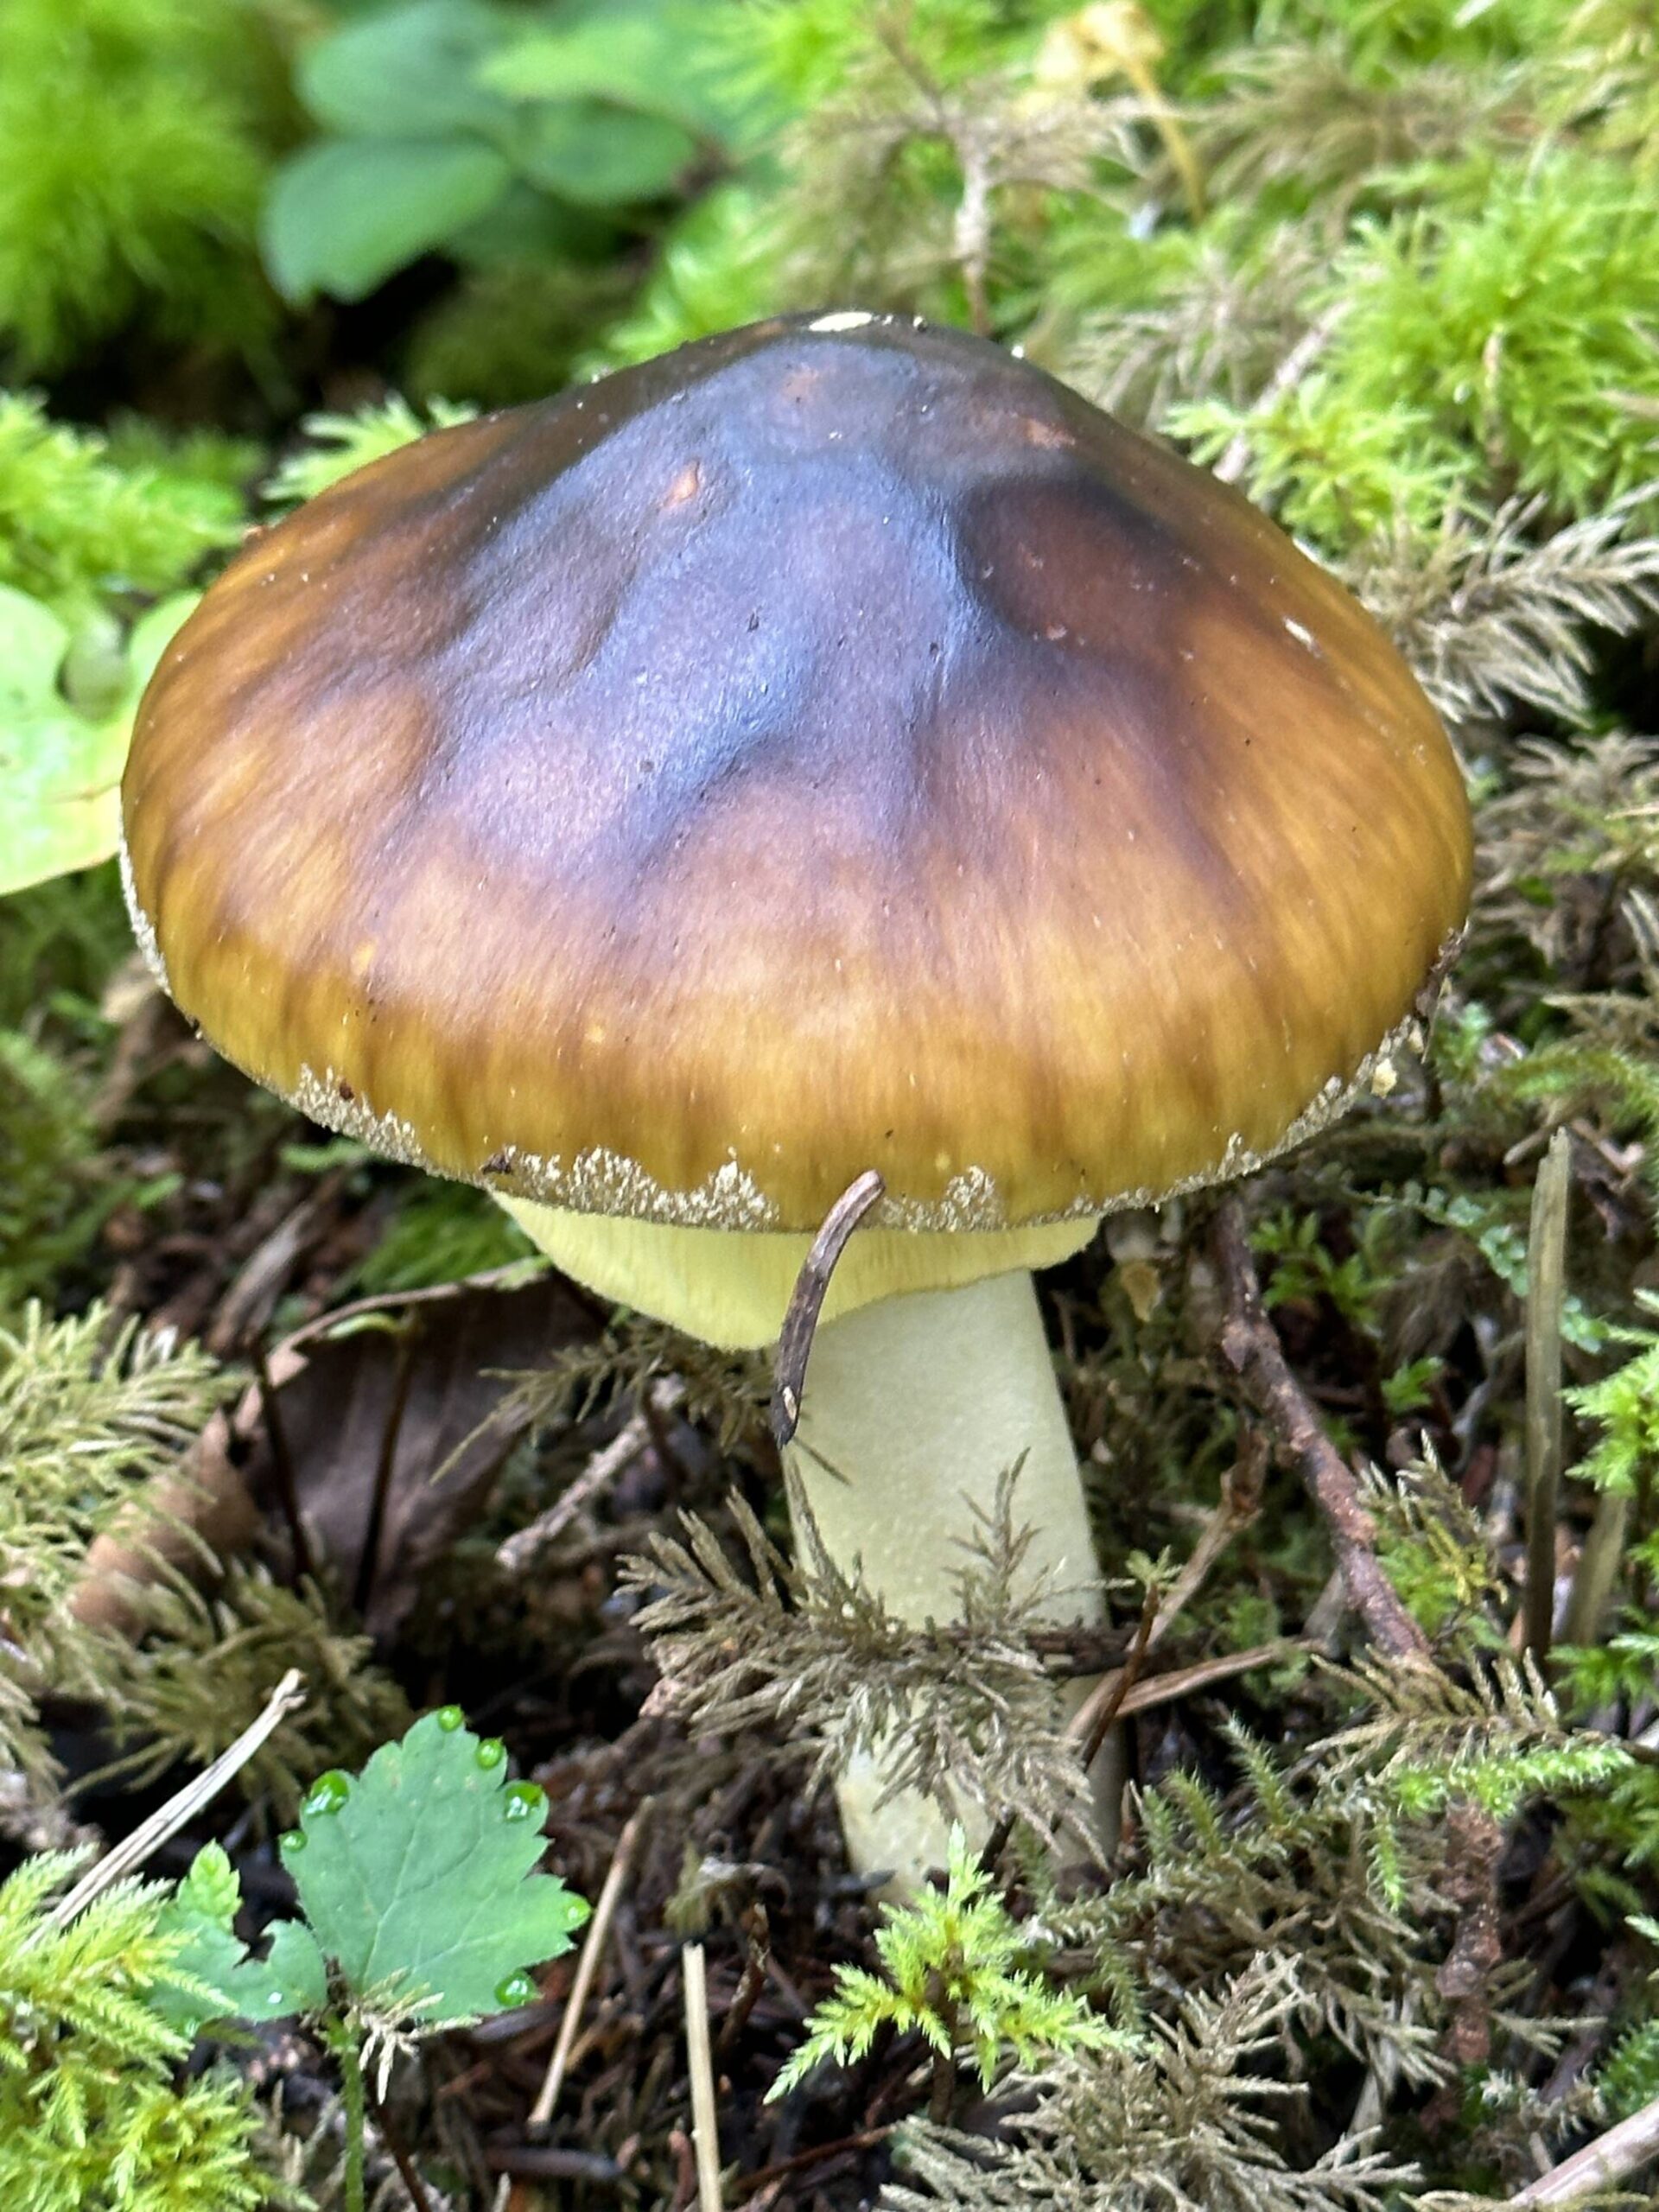 A mushroom along the Cowee Creek Trail to Echo Cove on Aug. 19. (Photo by Deana Barajas)